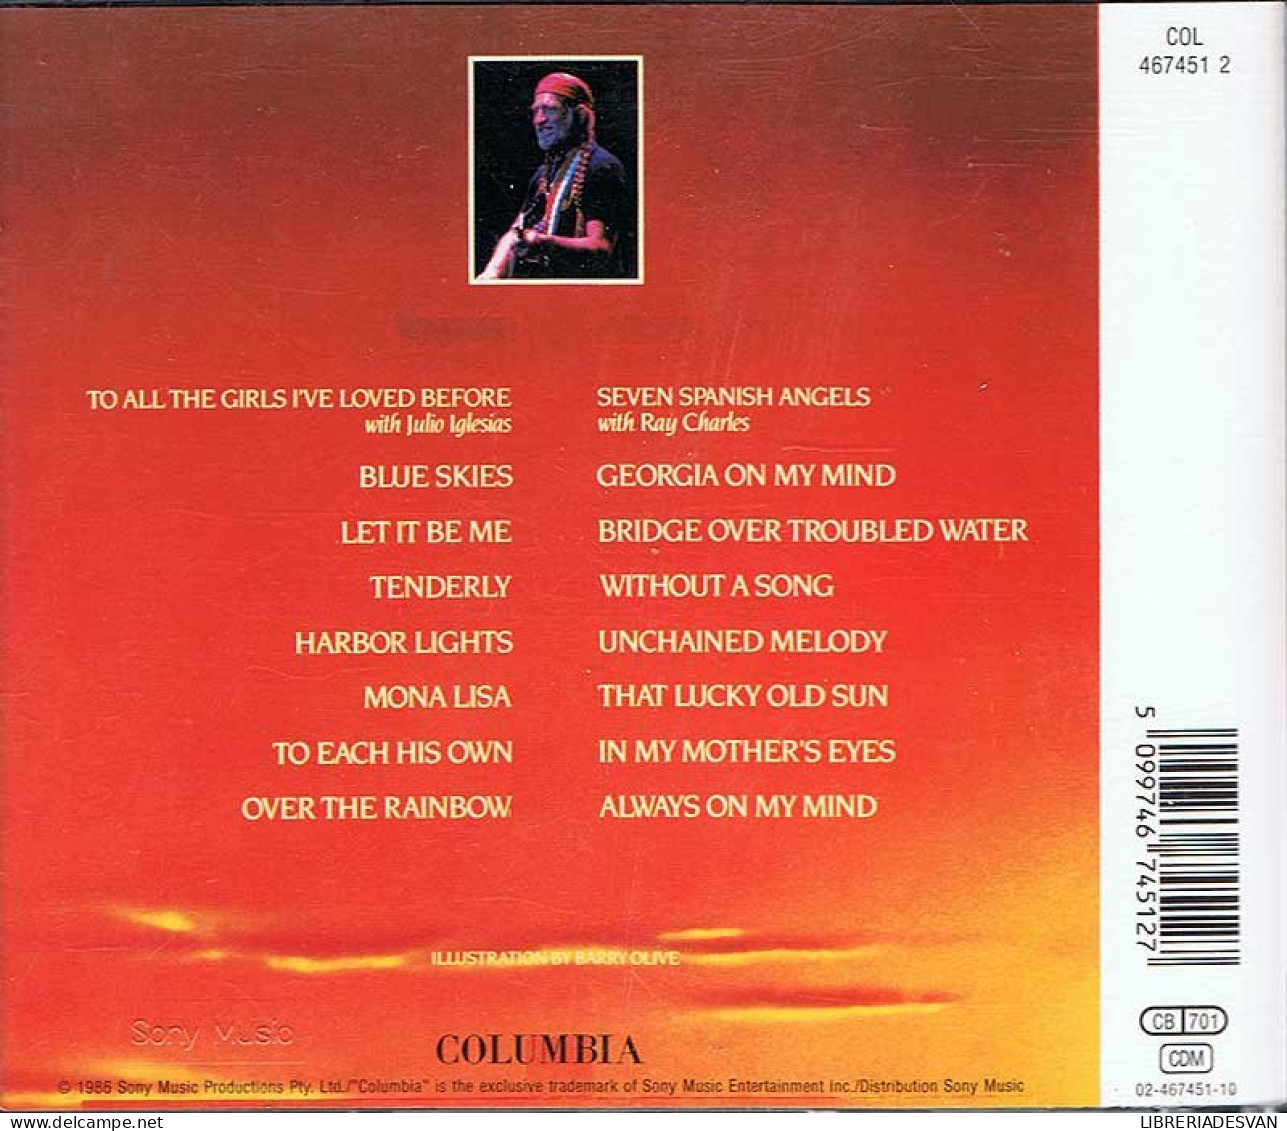 Willie Nelson - Love Songs. CD - Country & Folk